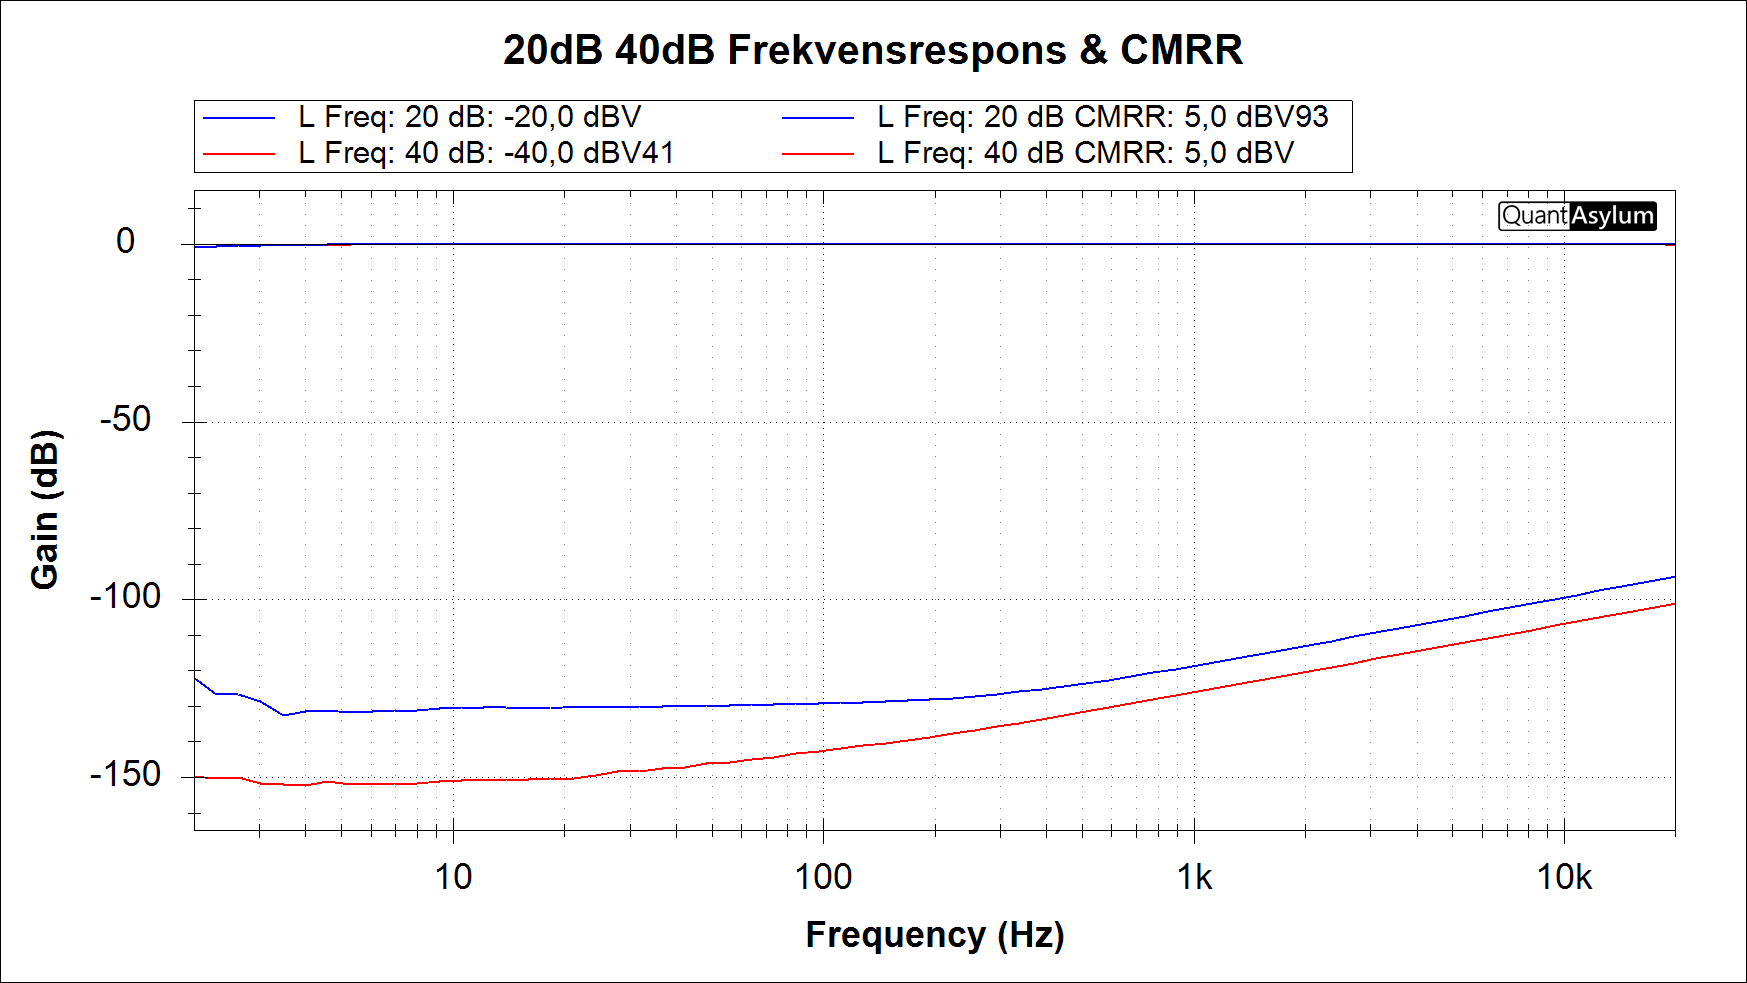 20dB 40dB frekvensrespons og CMRR.png